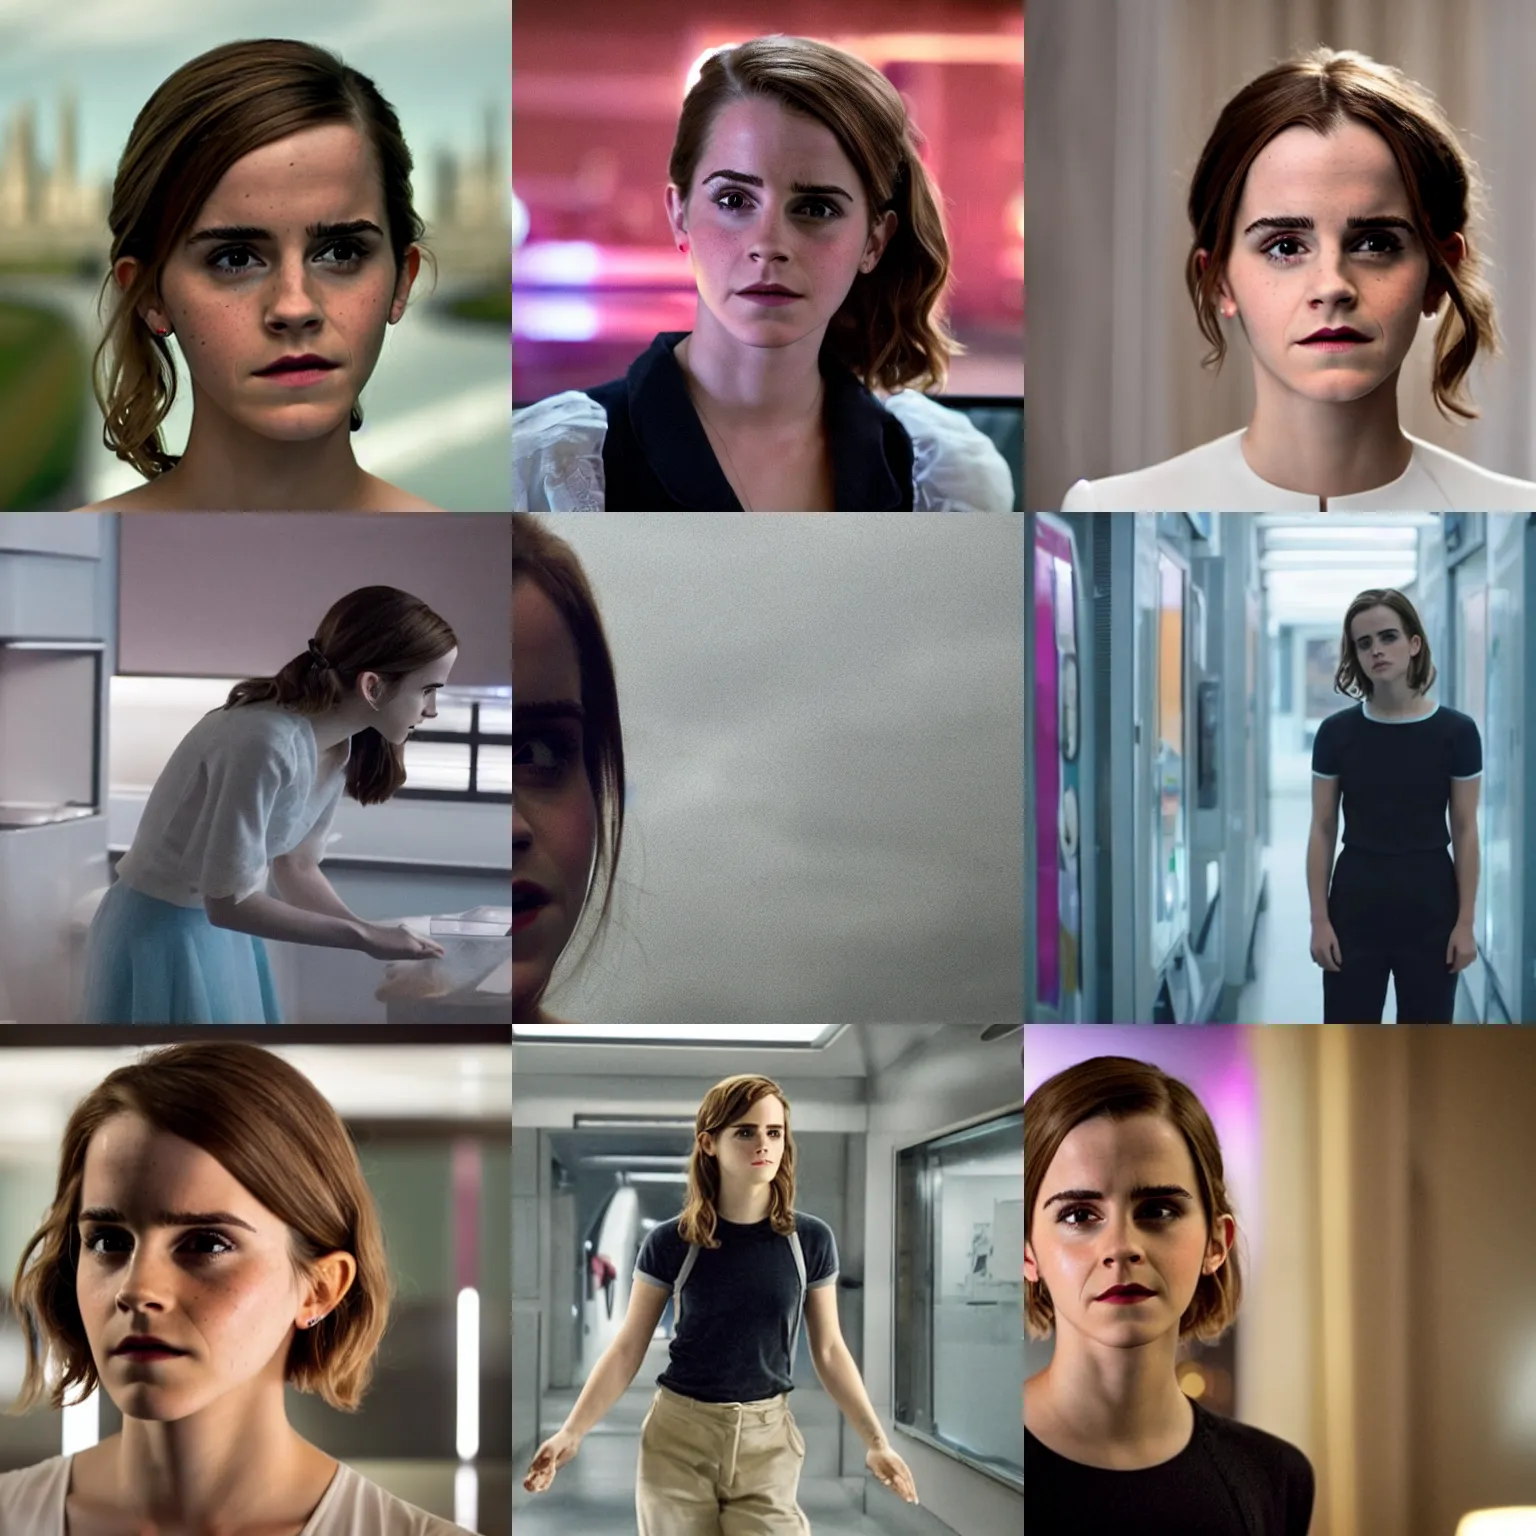 Prompt: Movie still of Emma Watson in Black Mirror